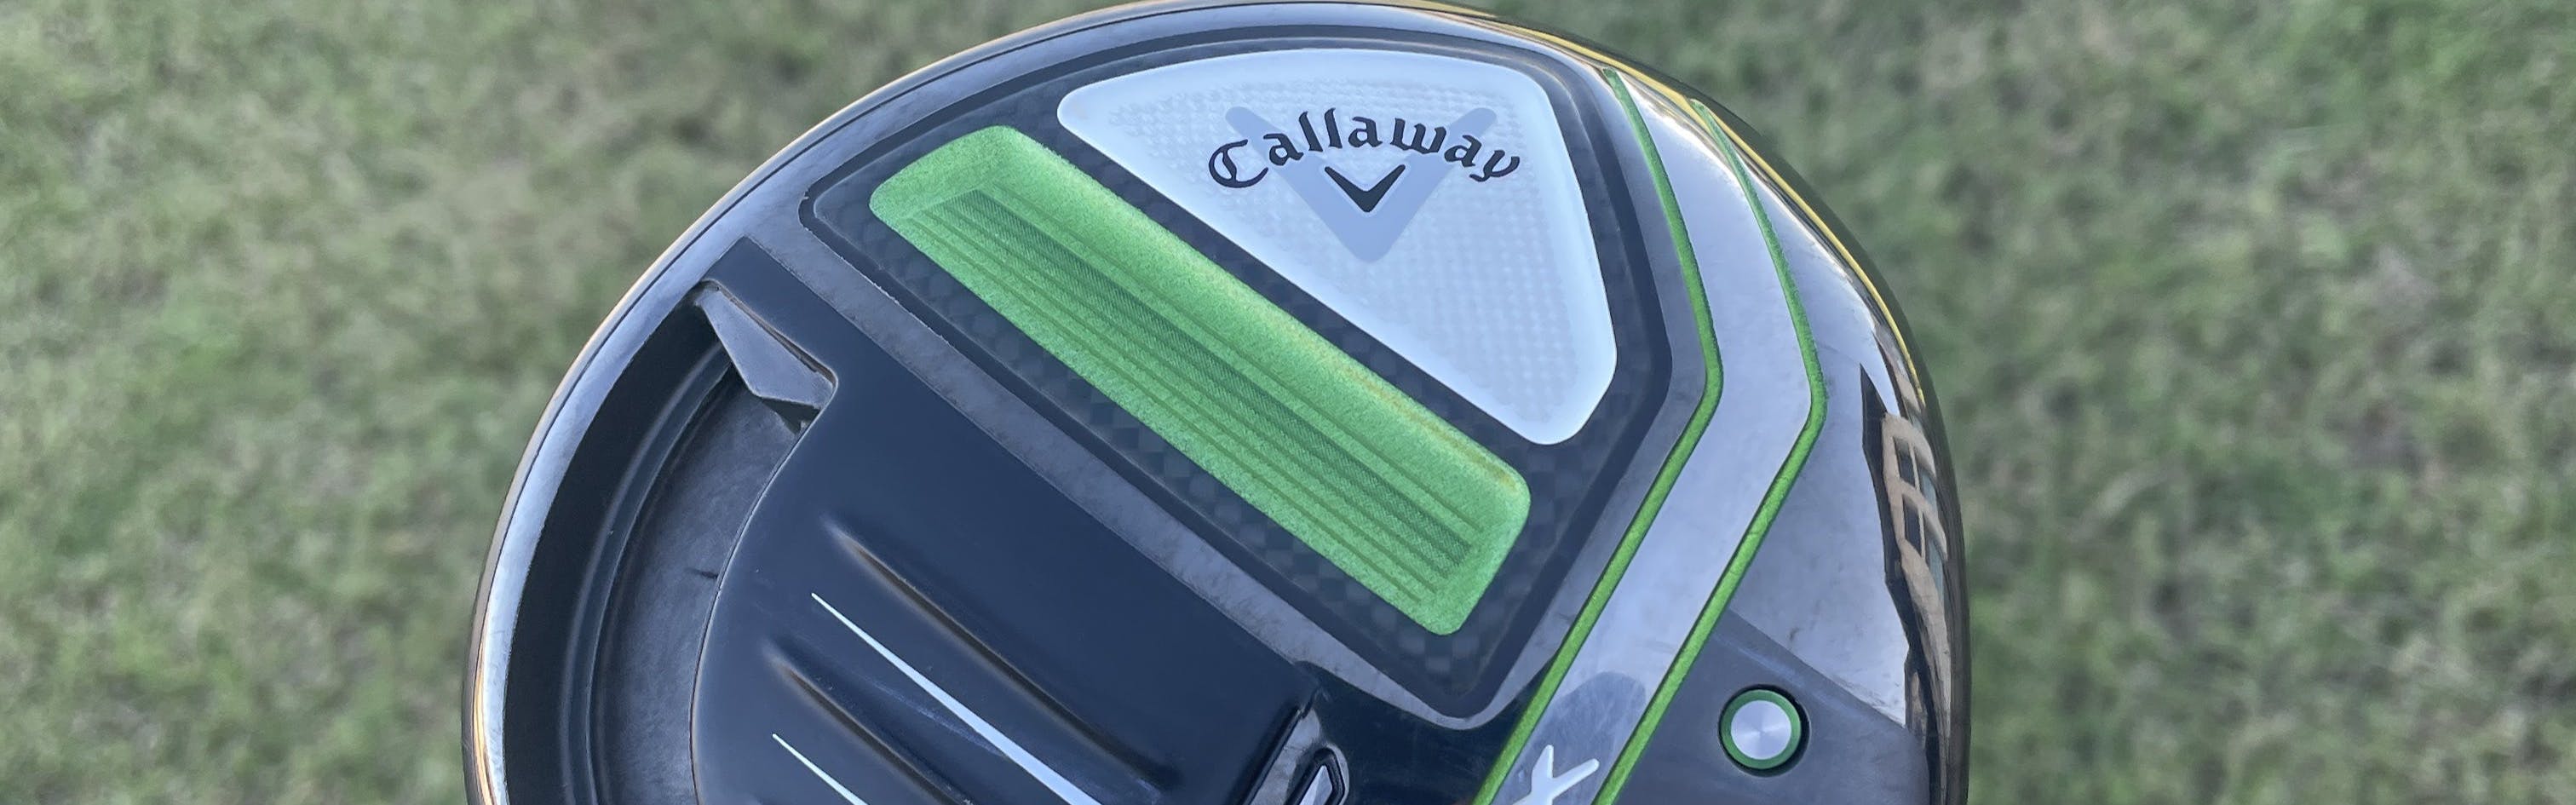  Callaway Golf 2021 Epic Staff Bag, Black, White, Green :  Sports & Outdoors